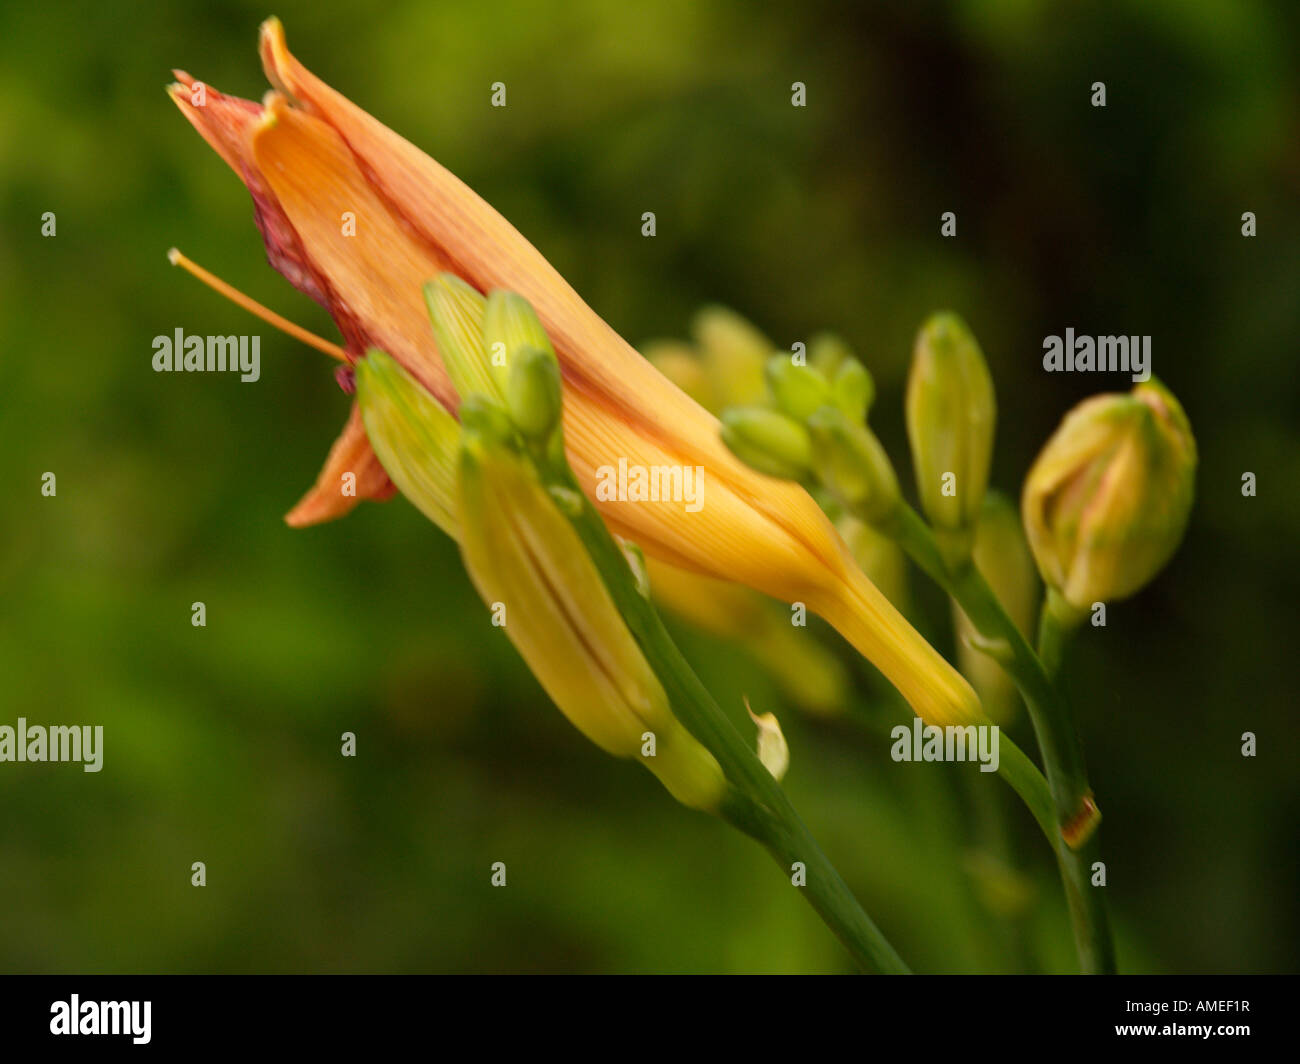 Hemerocallis day lily Stock Photo